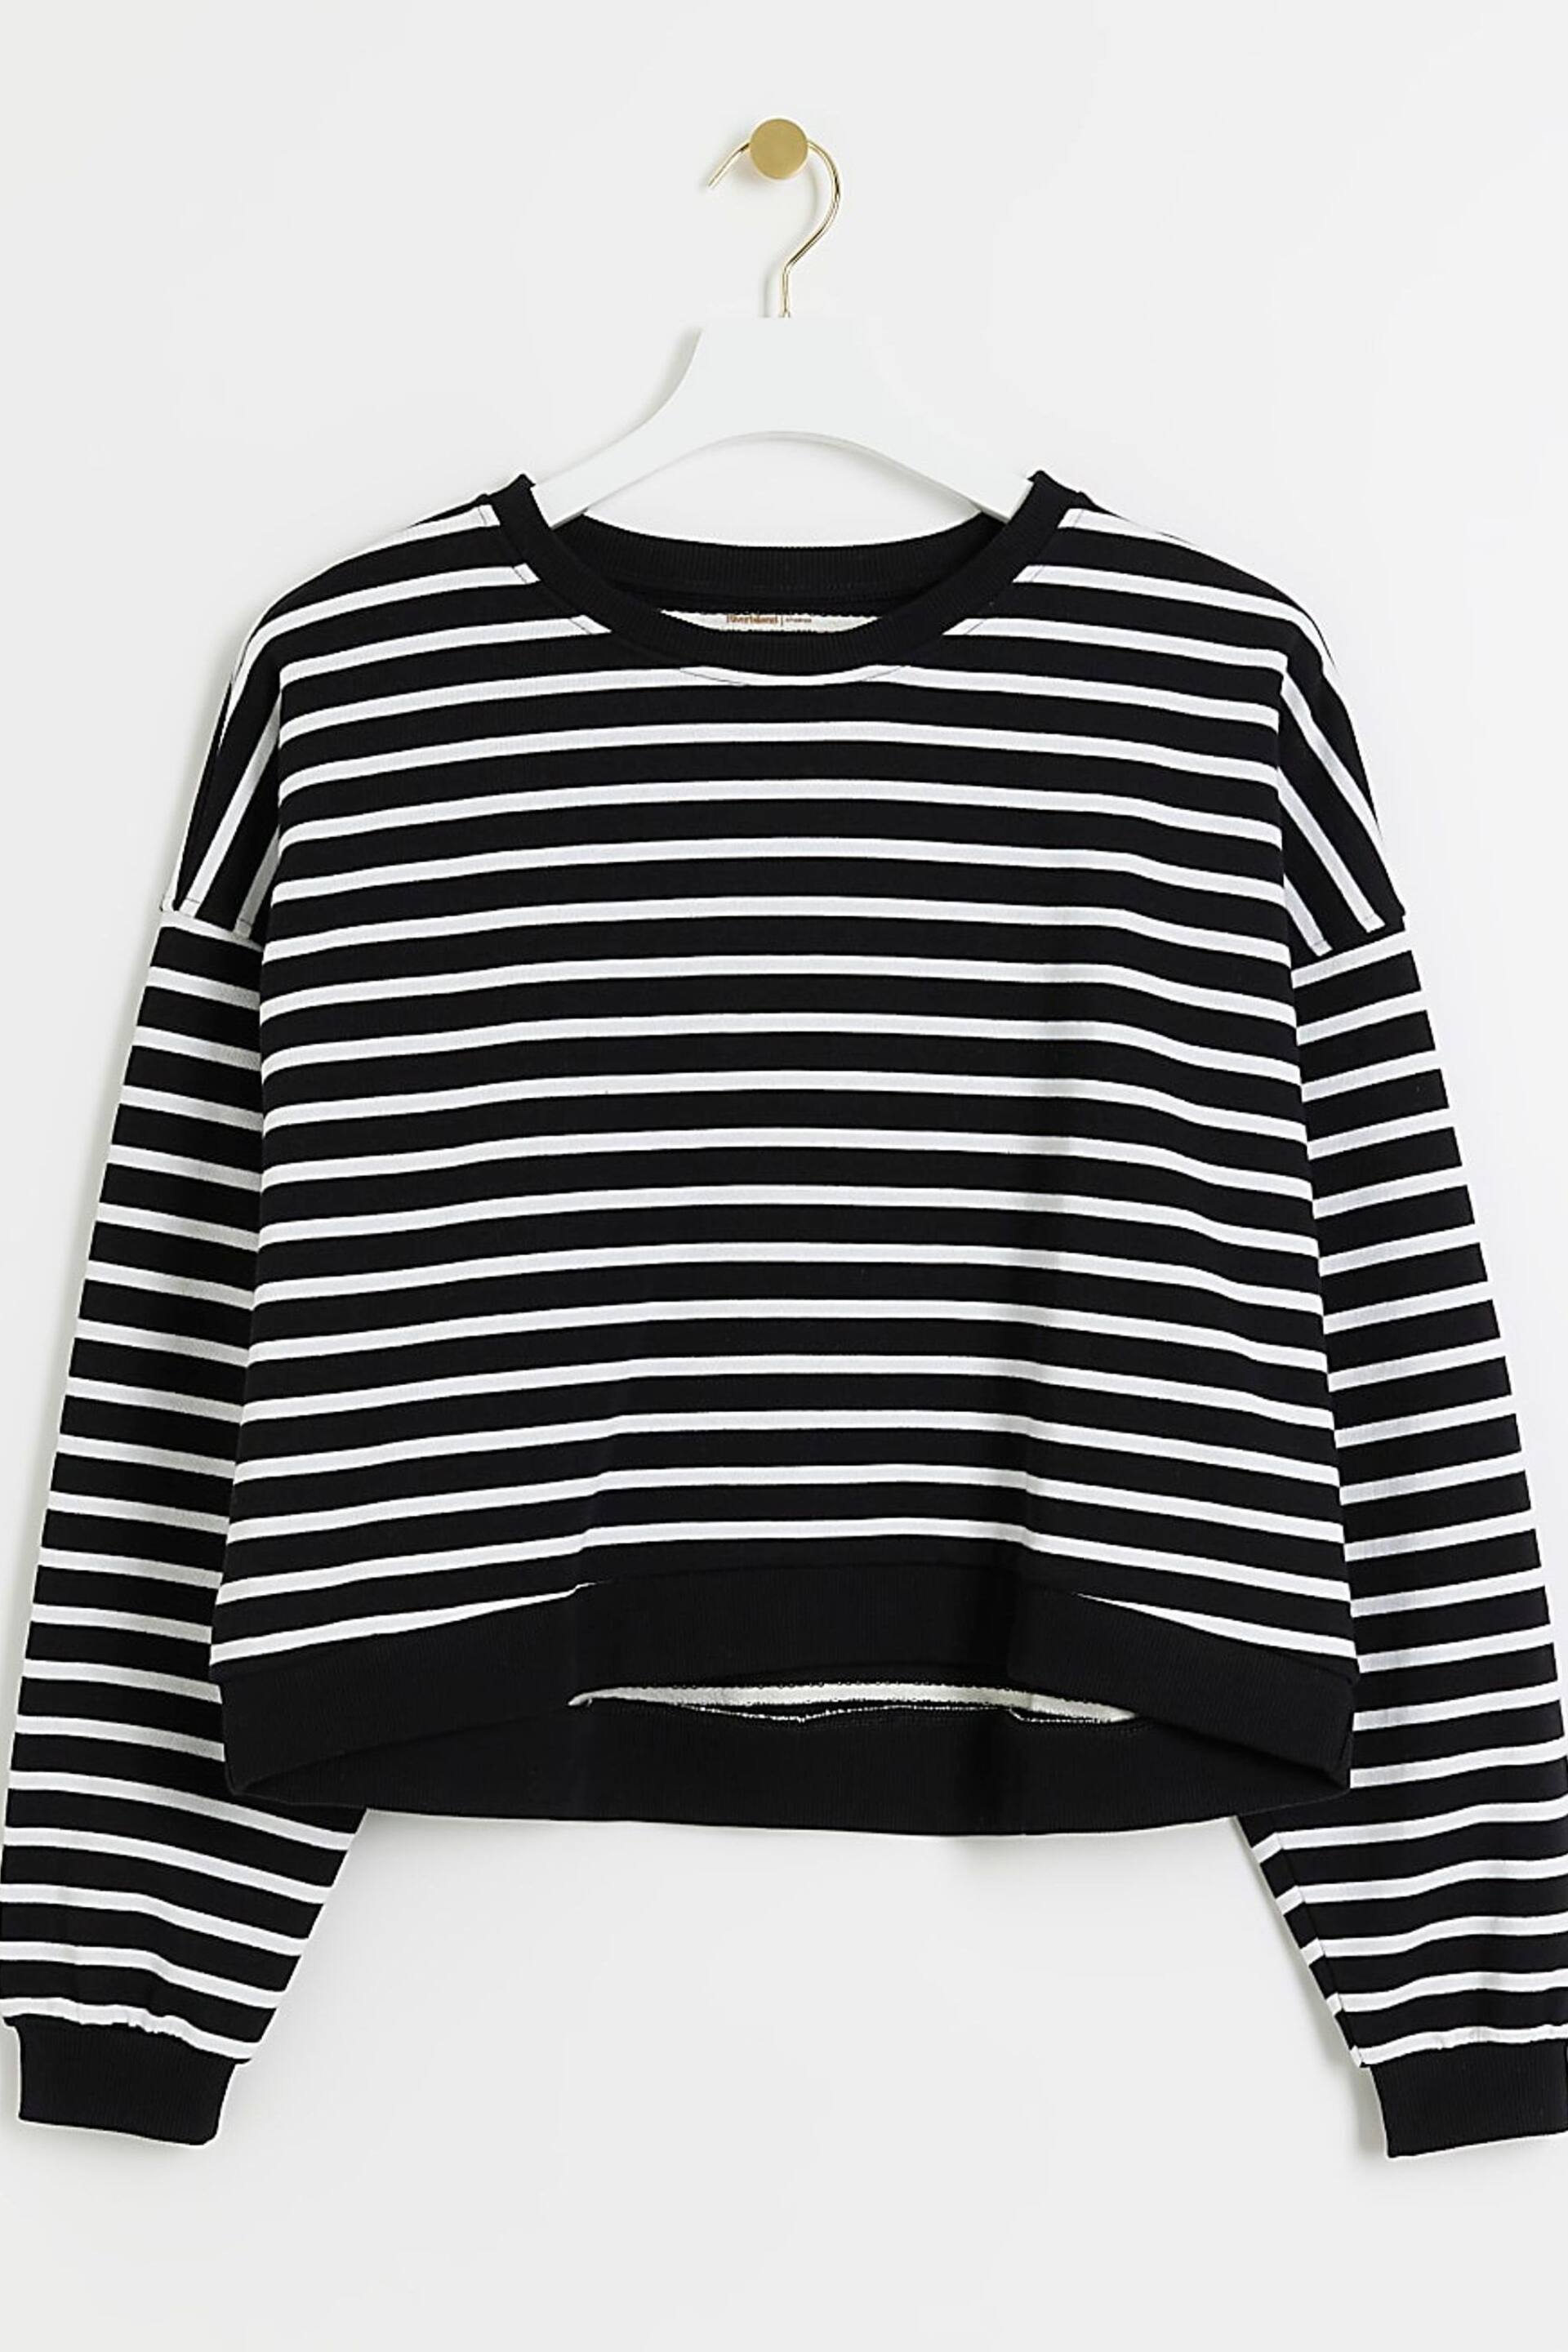 River Island Black Stripe Sweater - Image 6 of 6